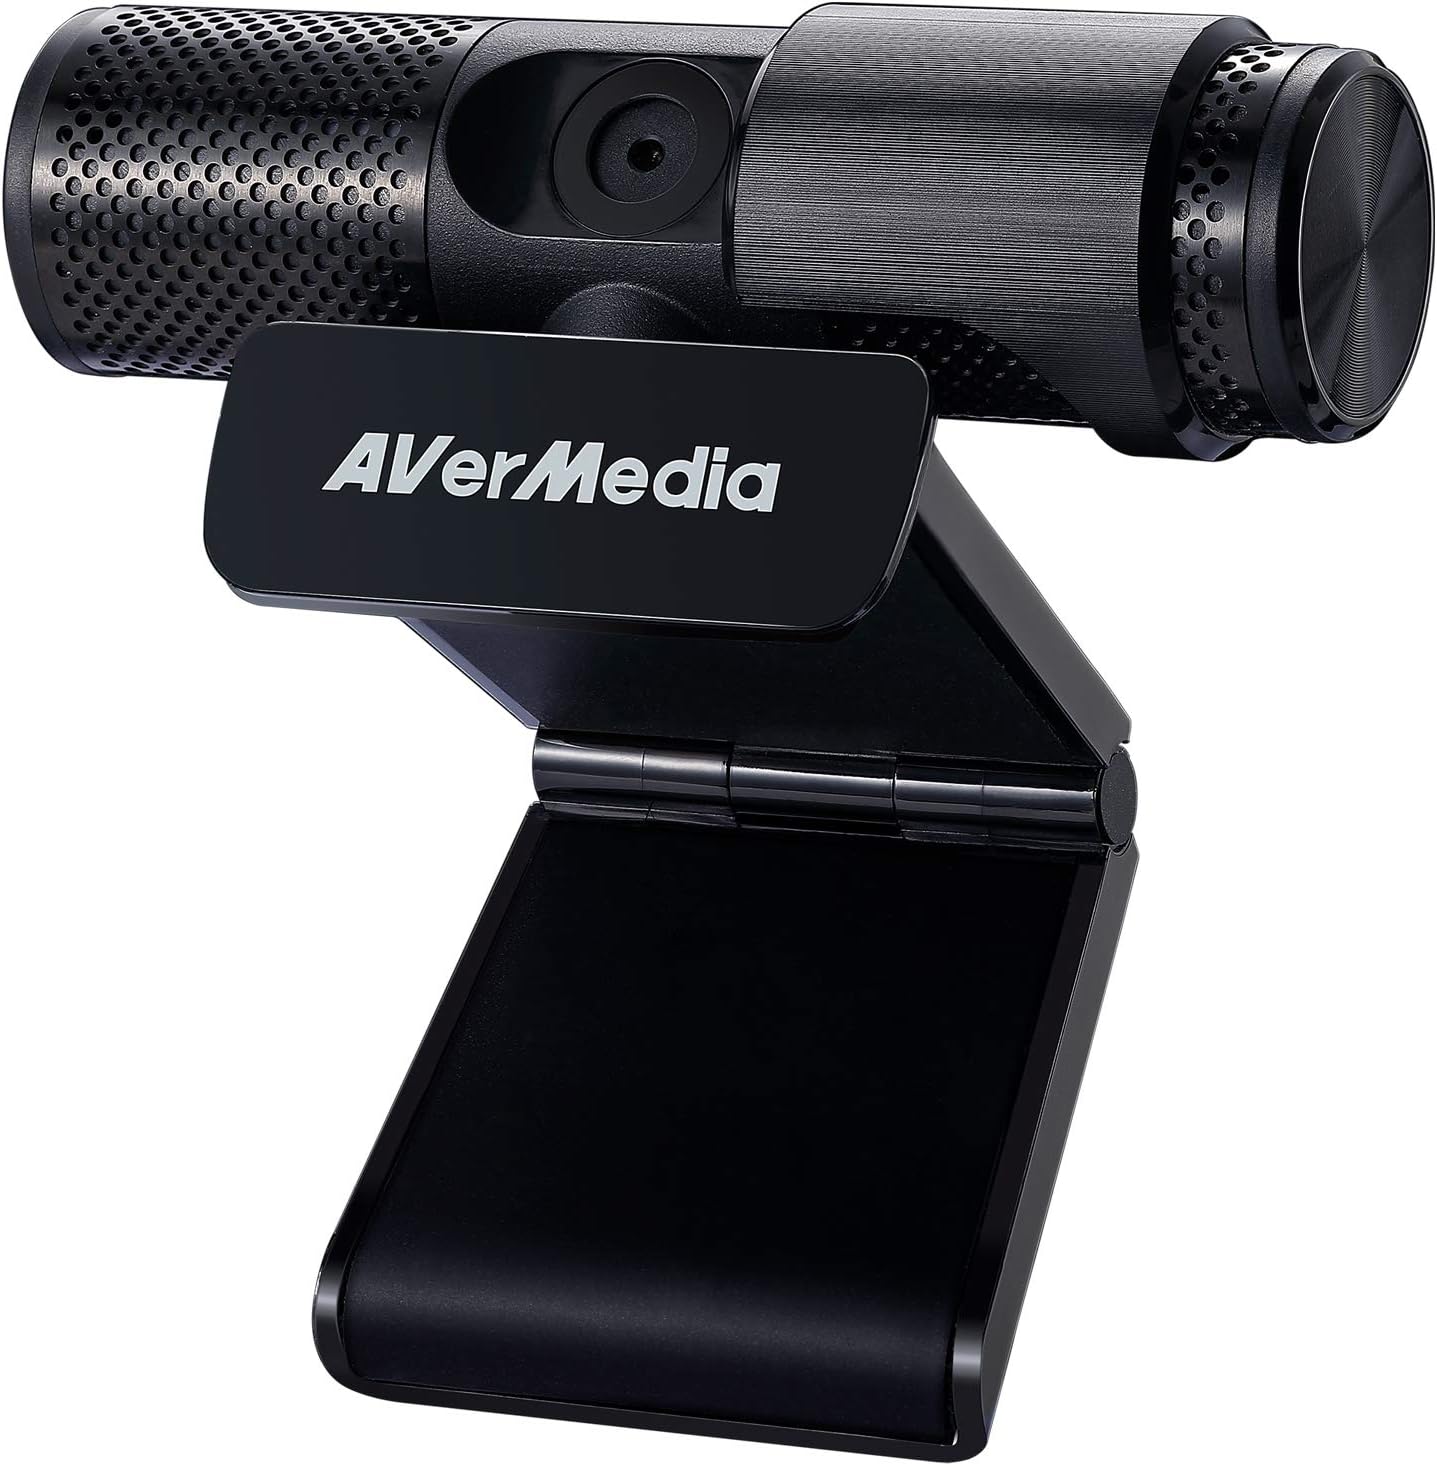 AVerMedia Full HD 1080P Live Stream Webcam